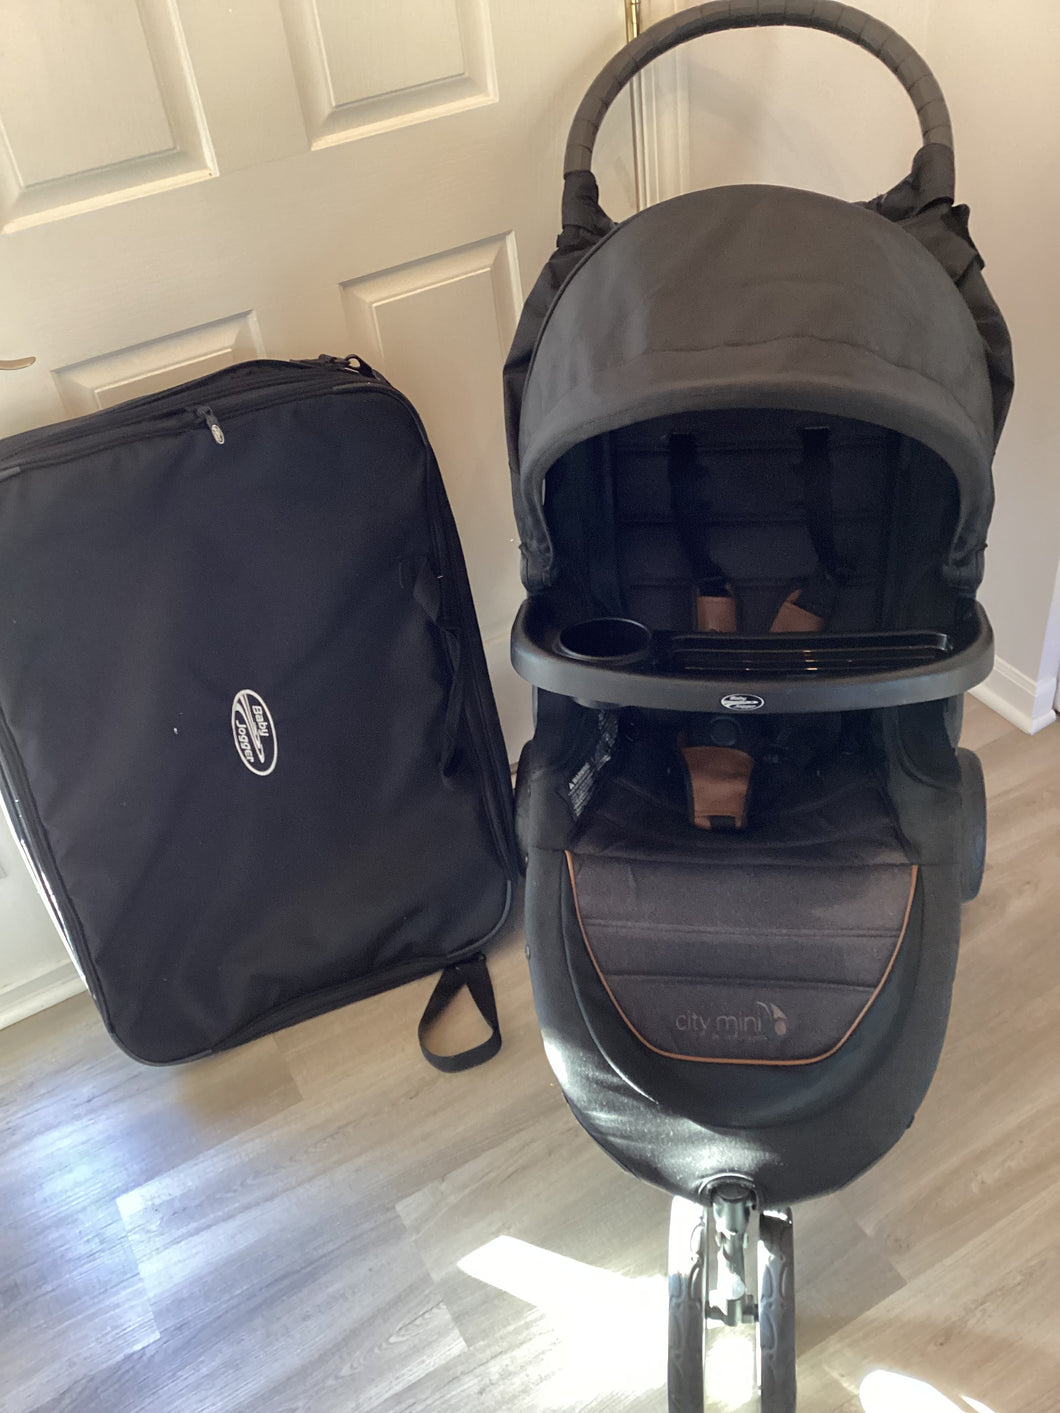 City Mini Lightweight Travel Stroller +travel Bag+Parent Console